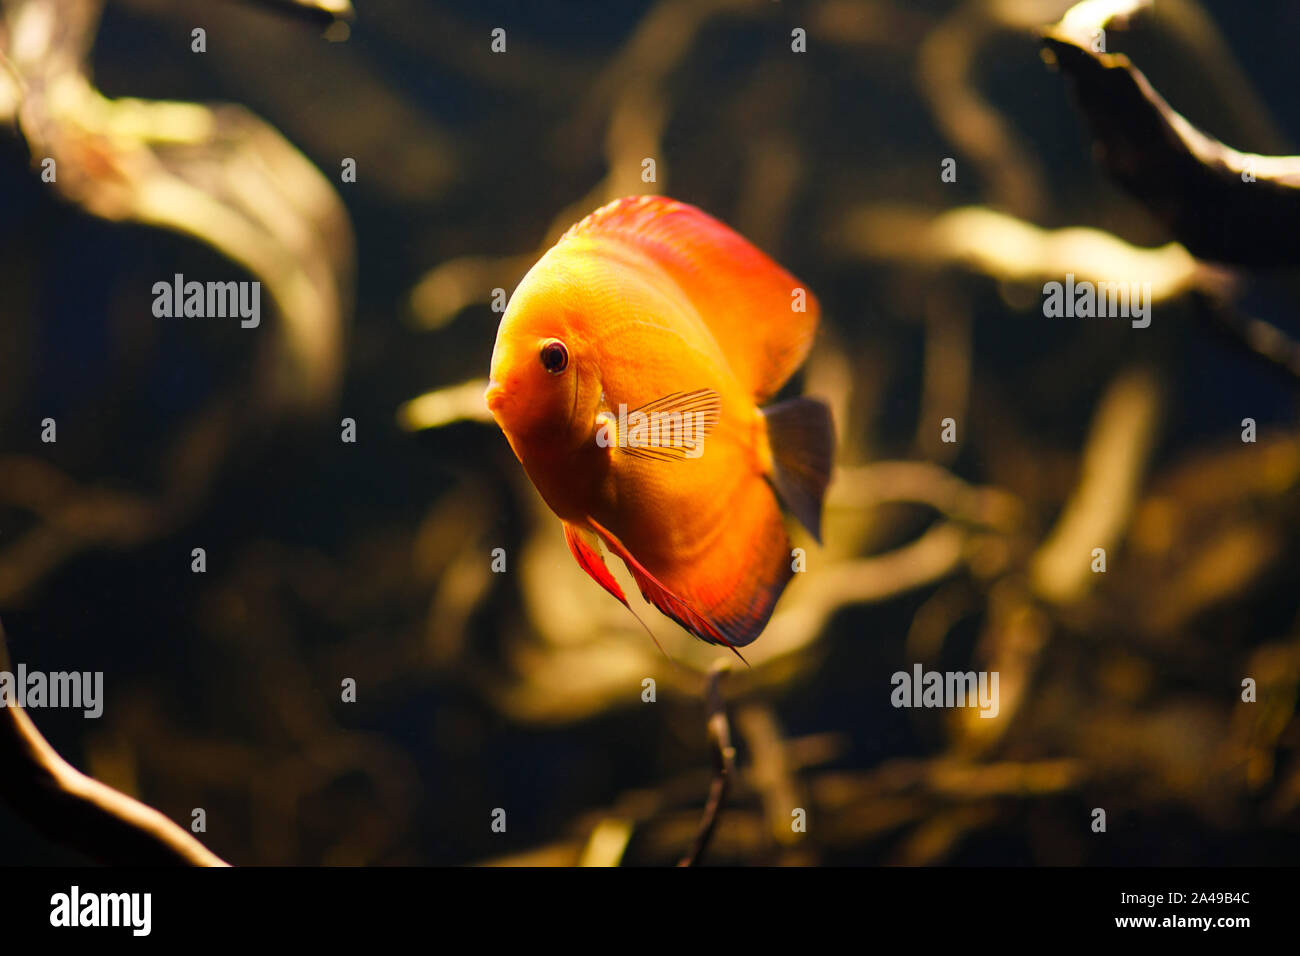 Red Discus fish swimming underwater close-up. Stock Photo